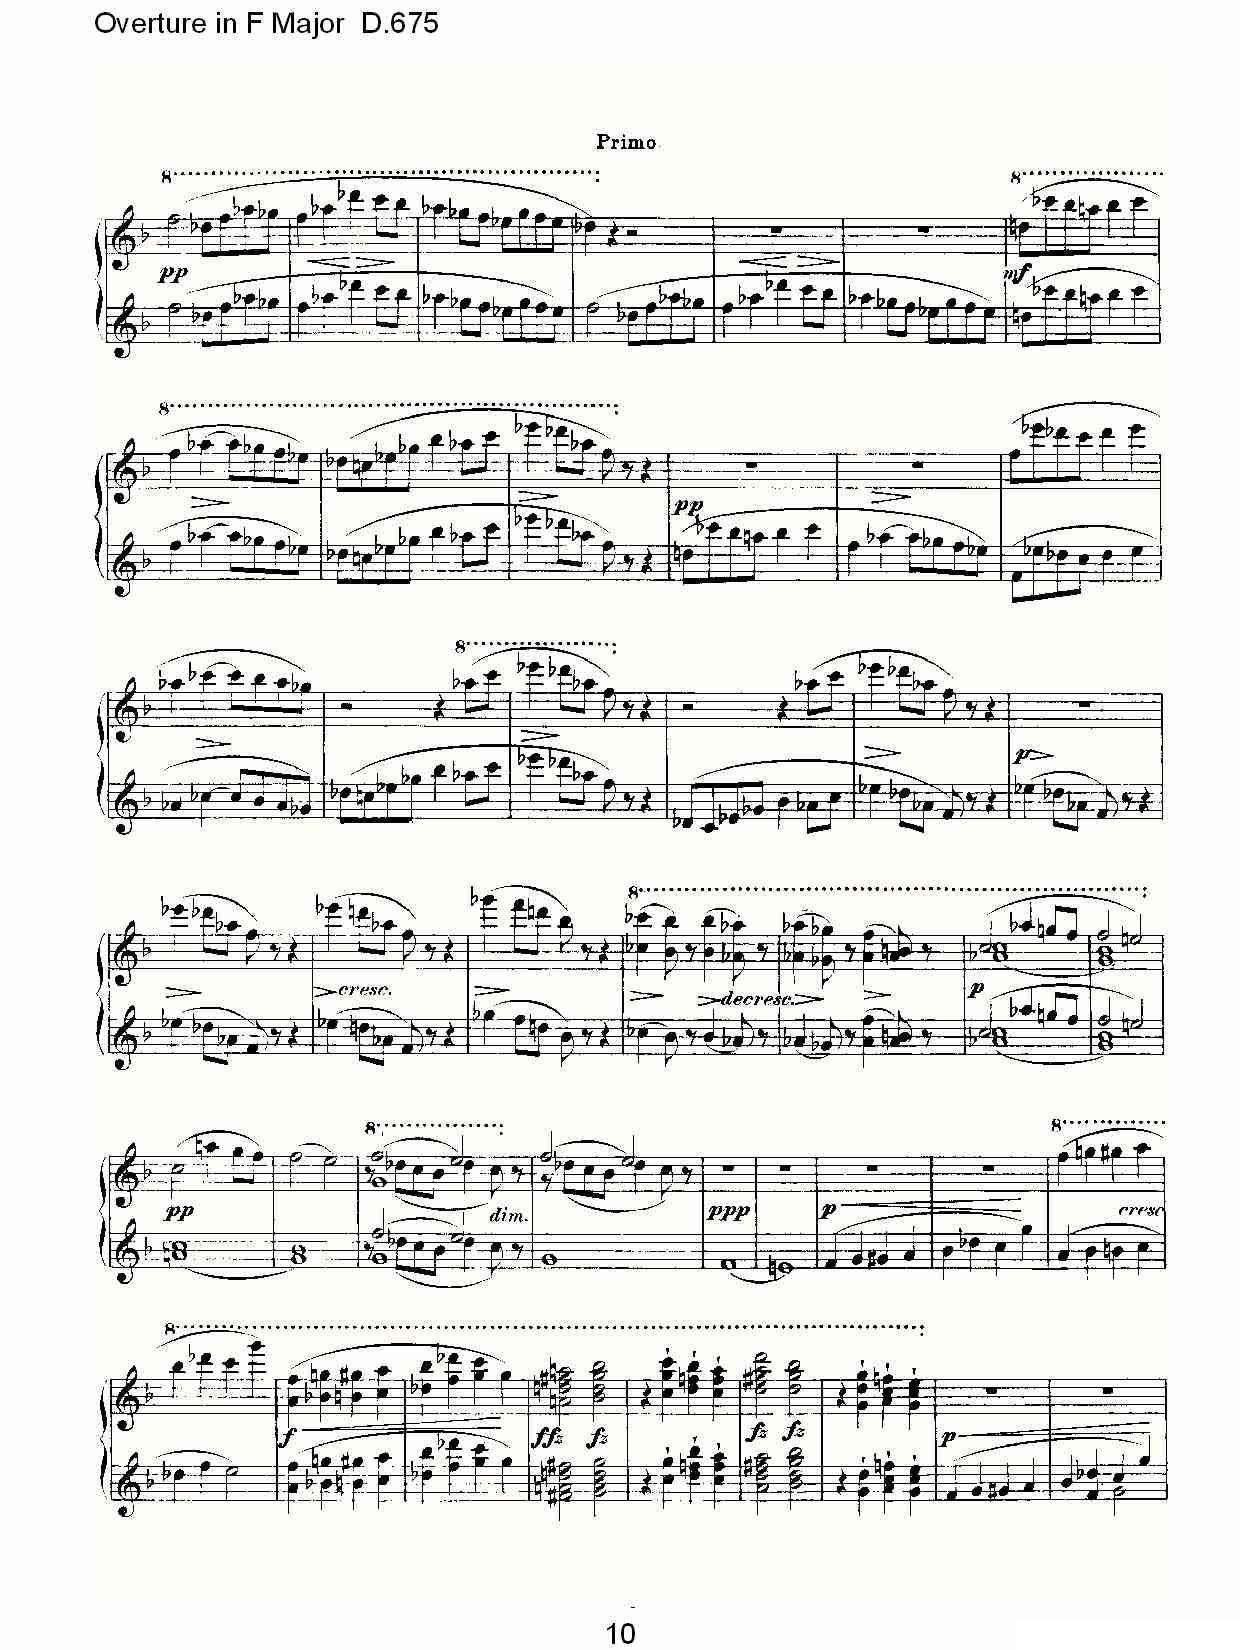 Overture in F Major D.675（Ｆ大调序曲 D.675）钢琴曲谱（图10）